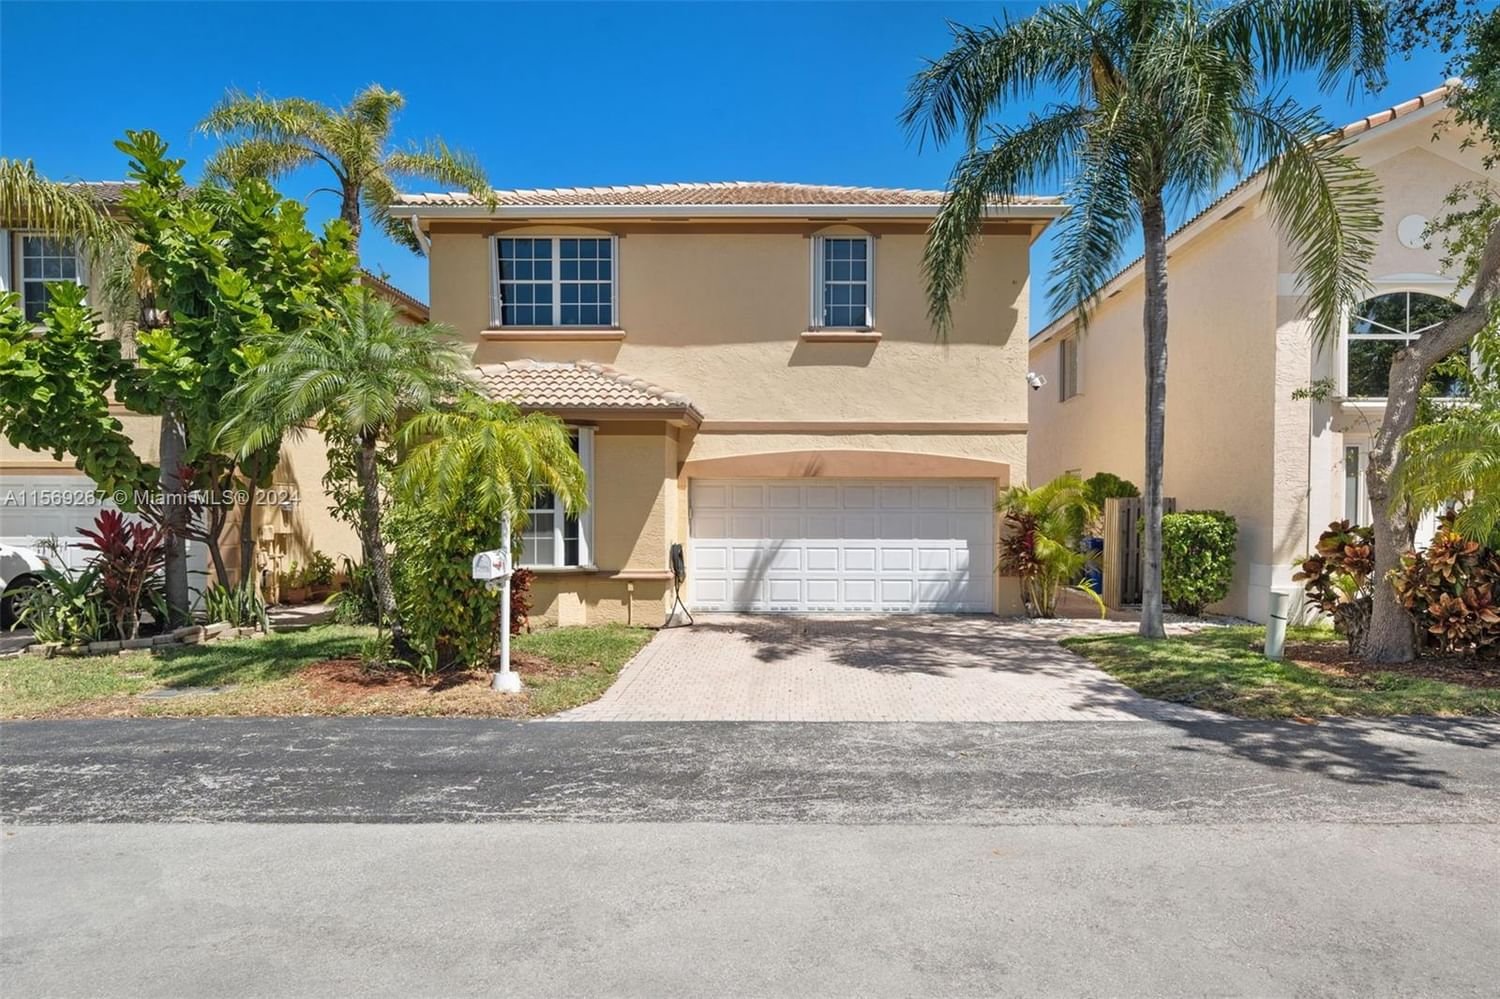 Real estate property located at 1251 Johnson Ct, Broward County, SAN MARINO VILLAGE, Hollywood, FL